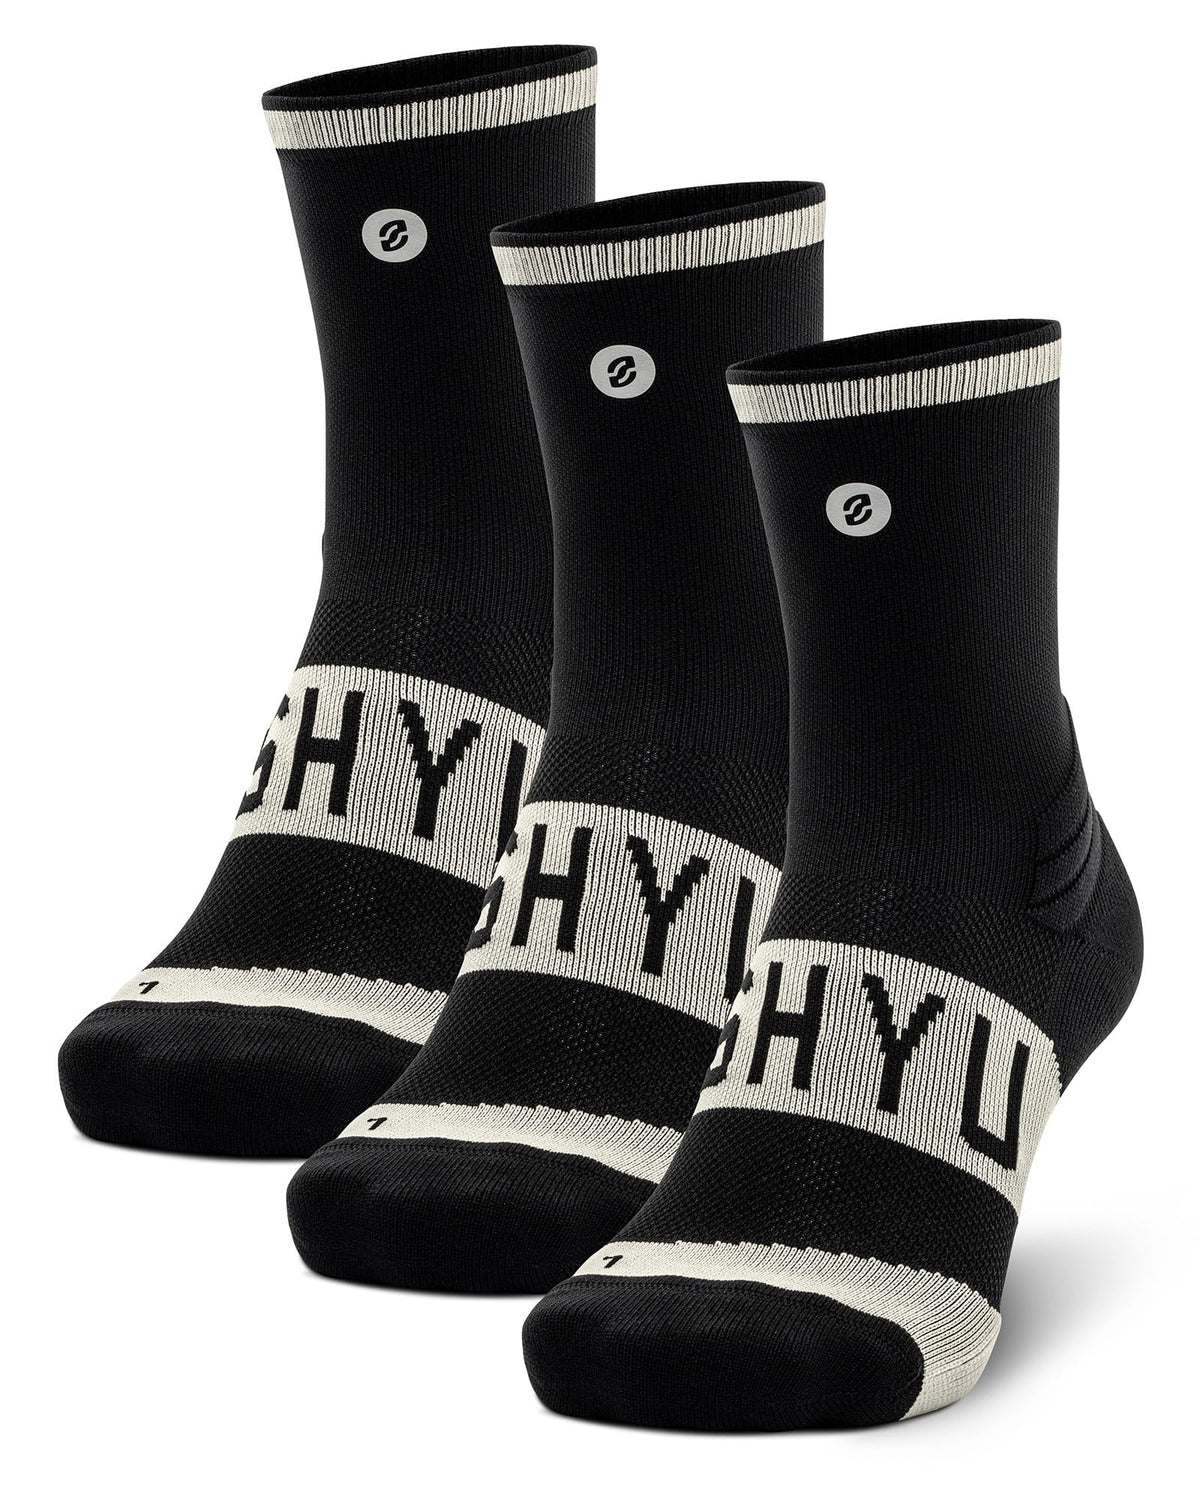 SHYU training socks - 3 pack (half crew - small sizes)